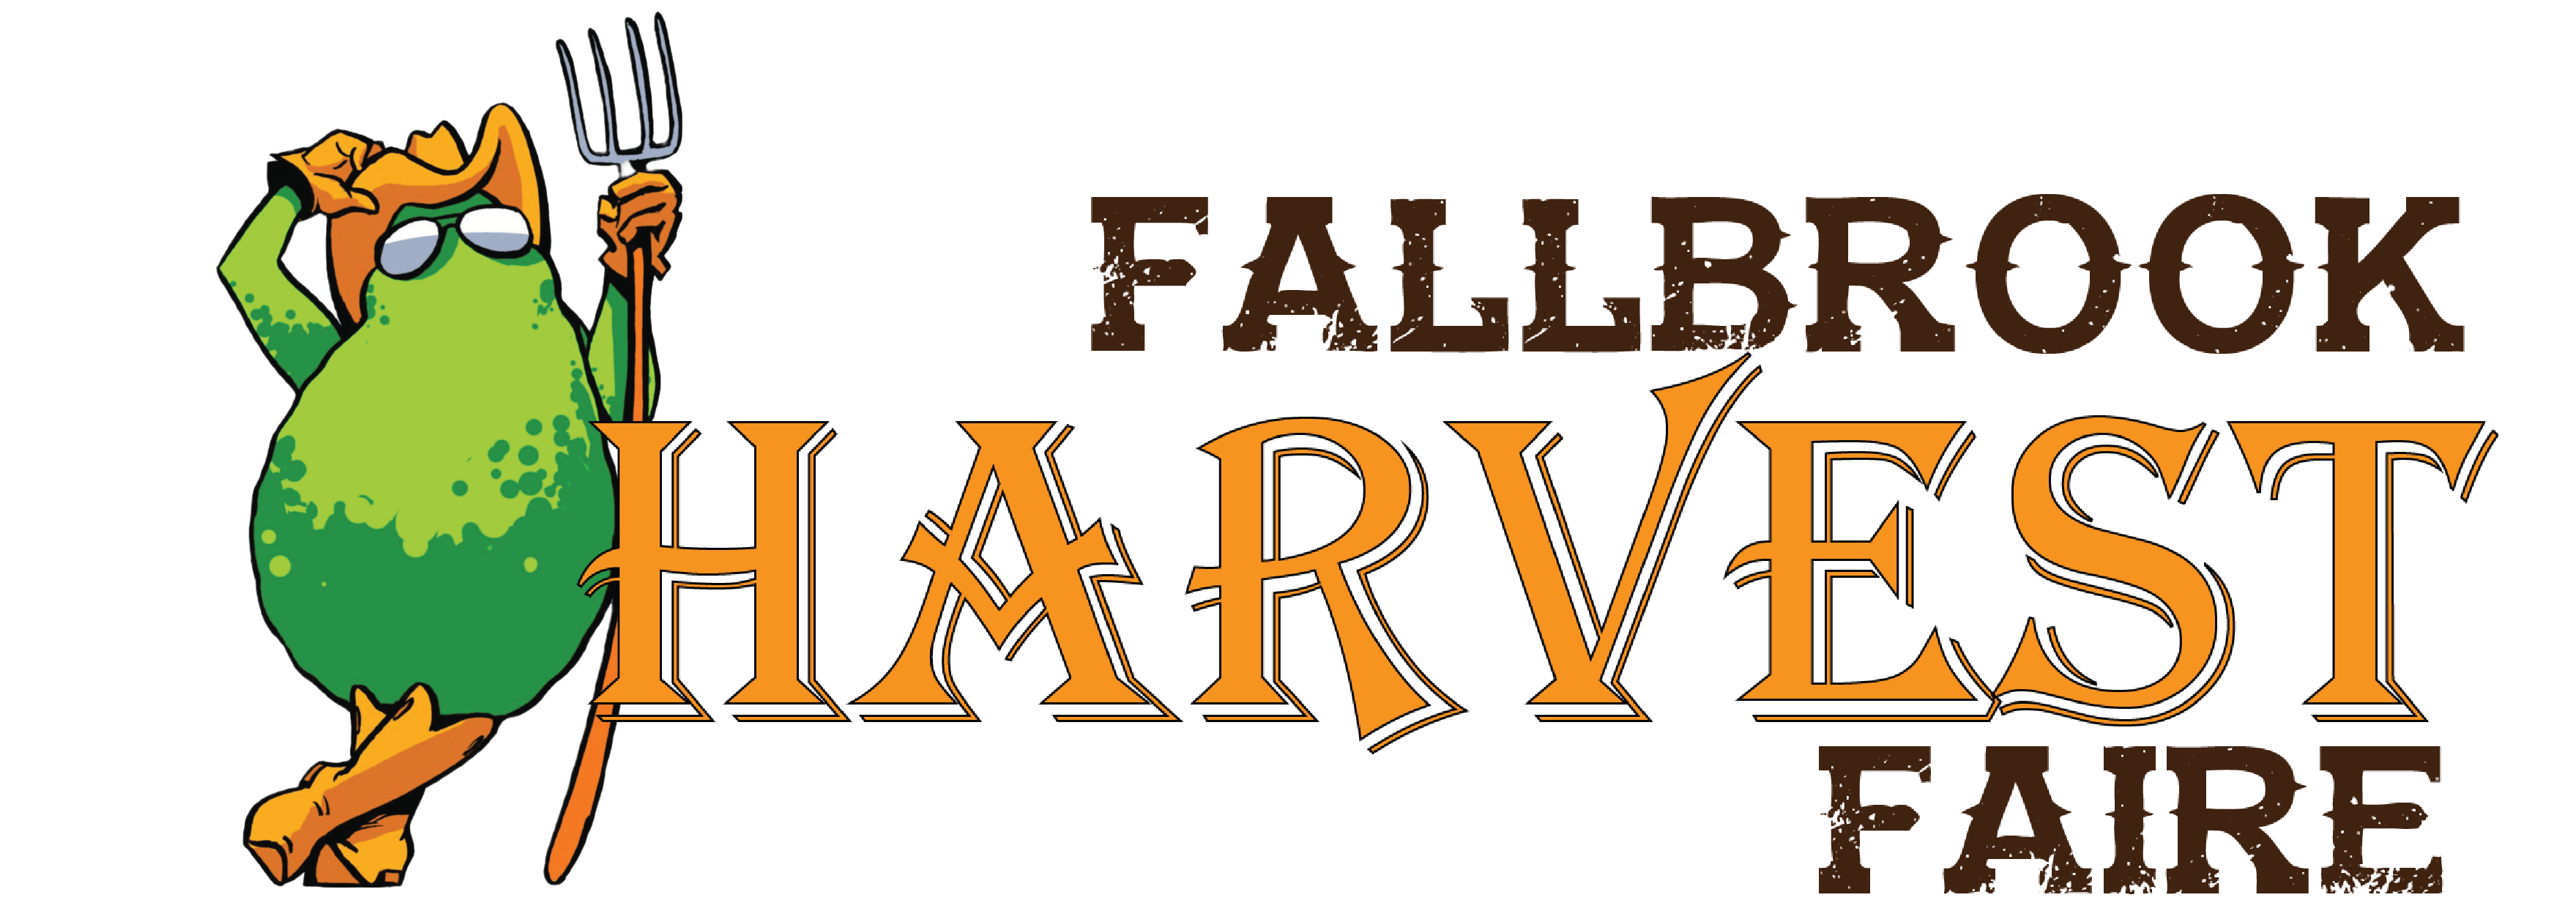 Fallbrook Harvest Faire